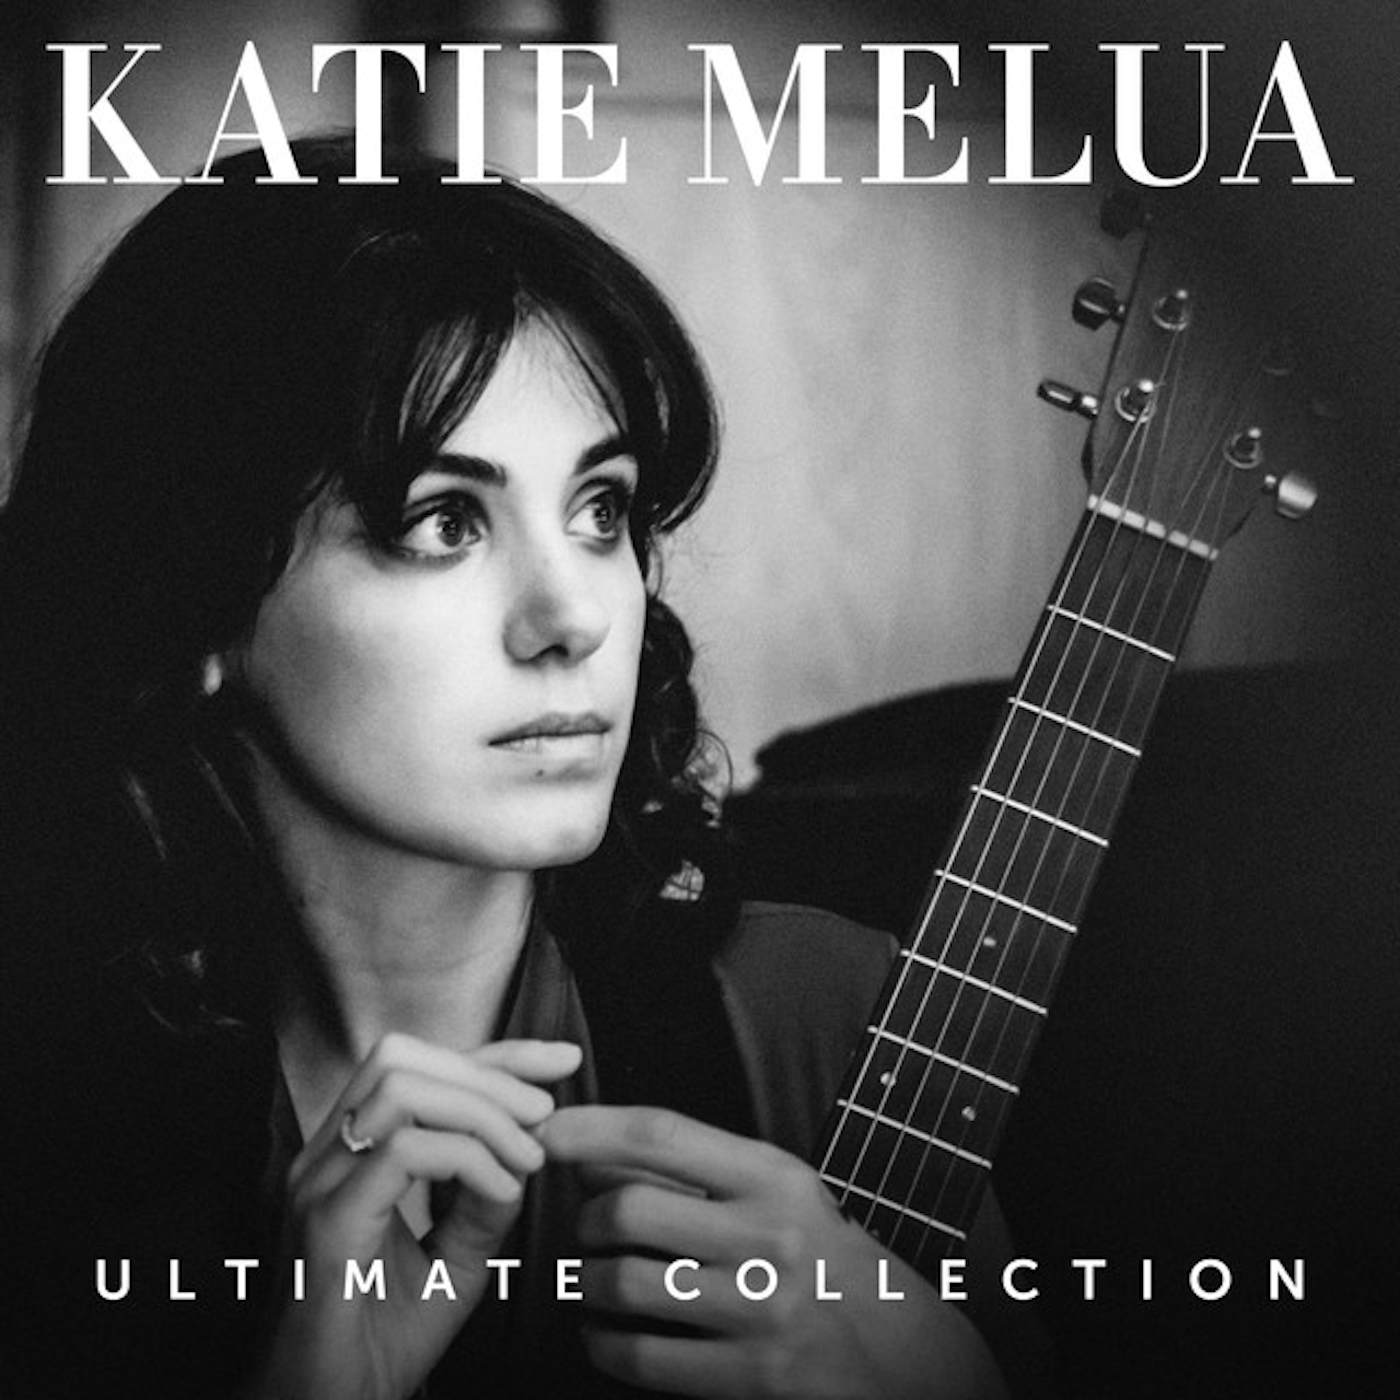 Katie Melua Ultimate Collection Vinyl Record